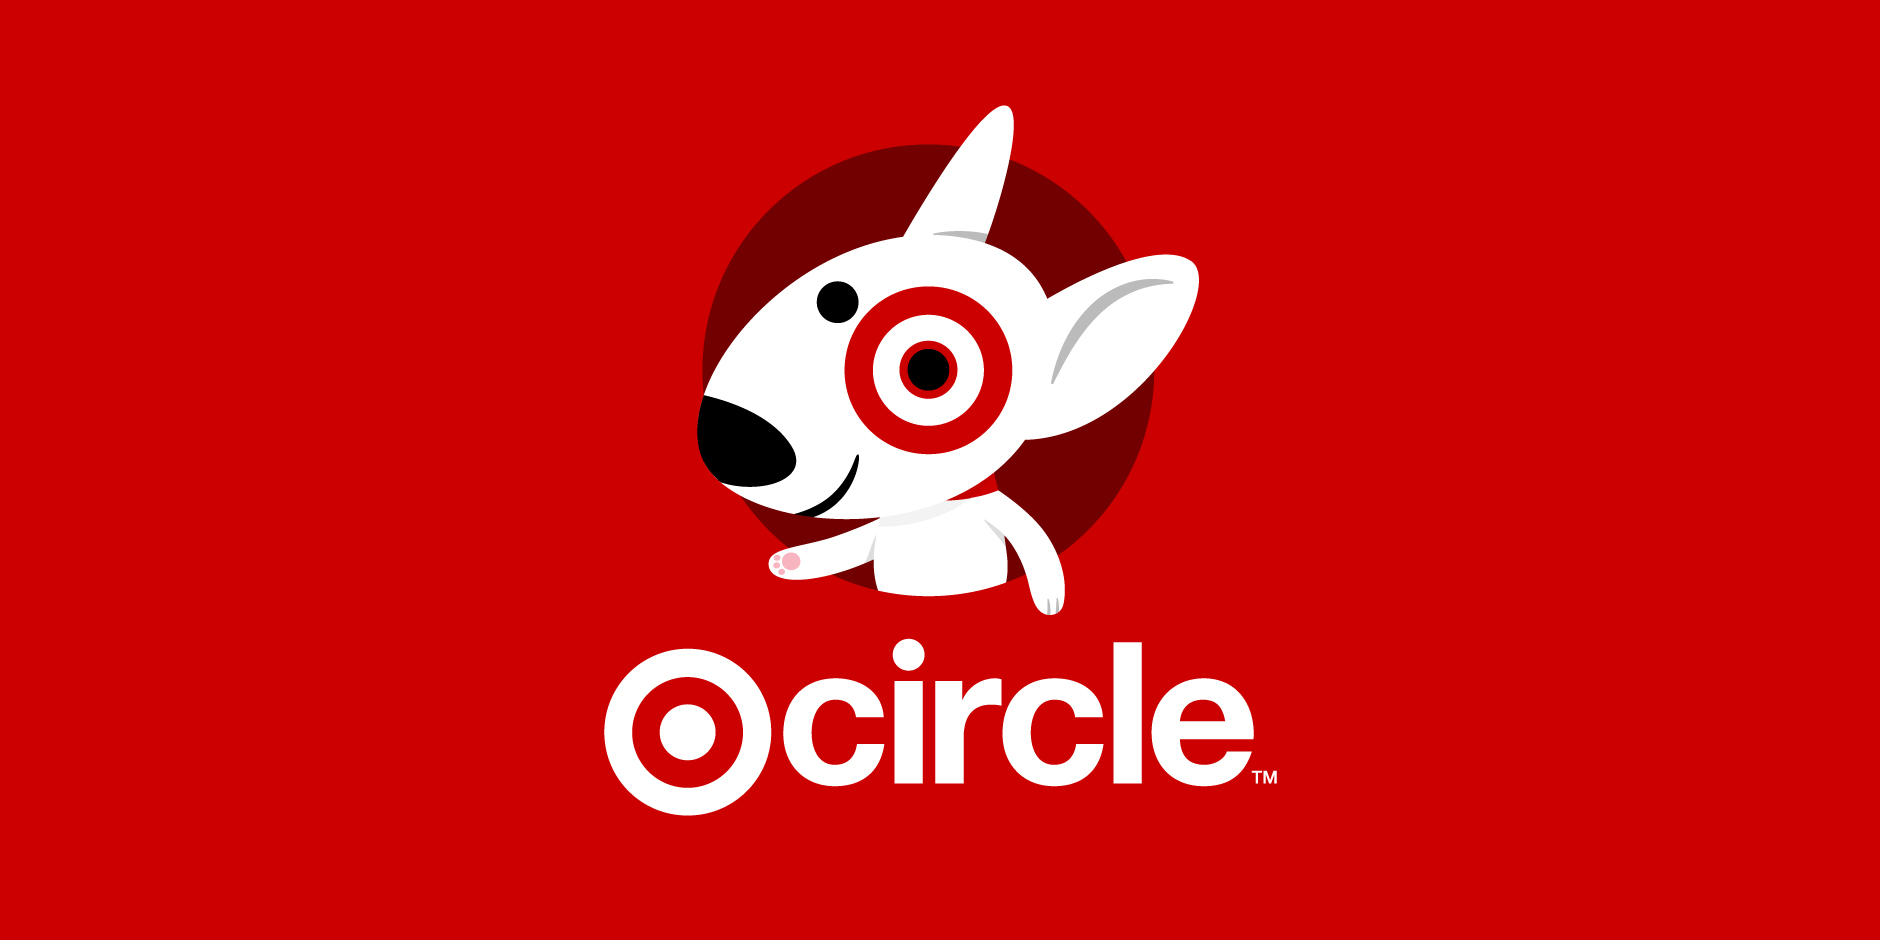 target's circle rewards program hits 100 million members